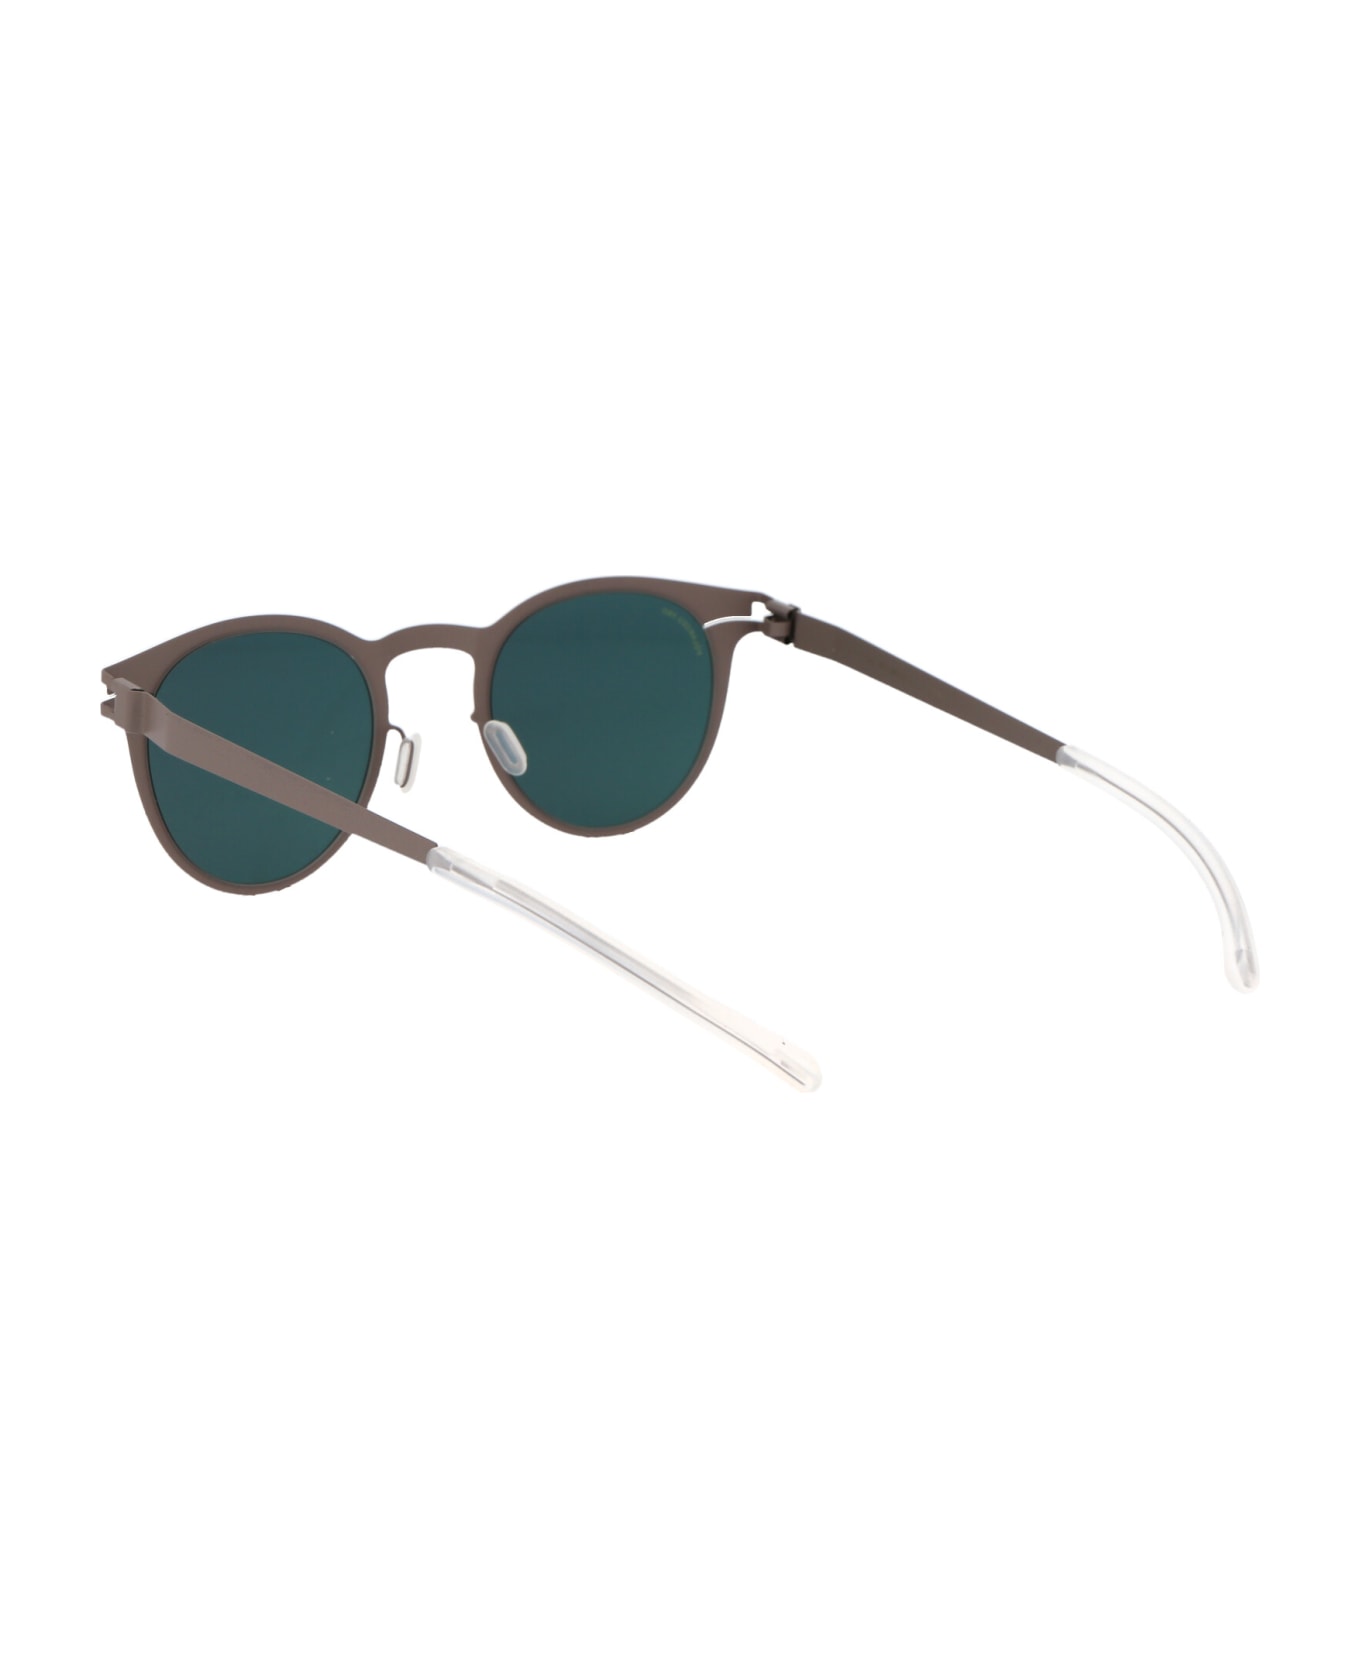 Mykita Riley Sunglasses - 223 MOLE GREY Polarized Pro Ocean Blue